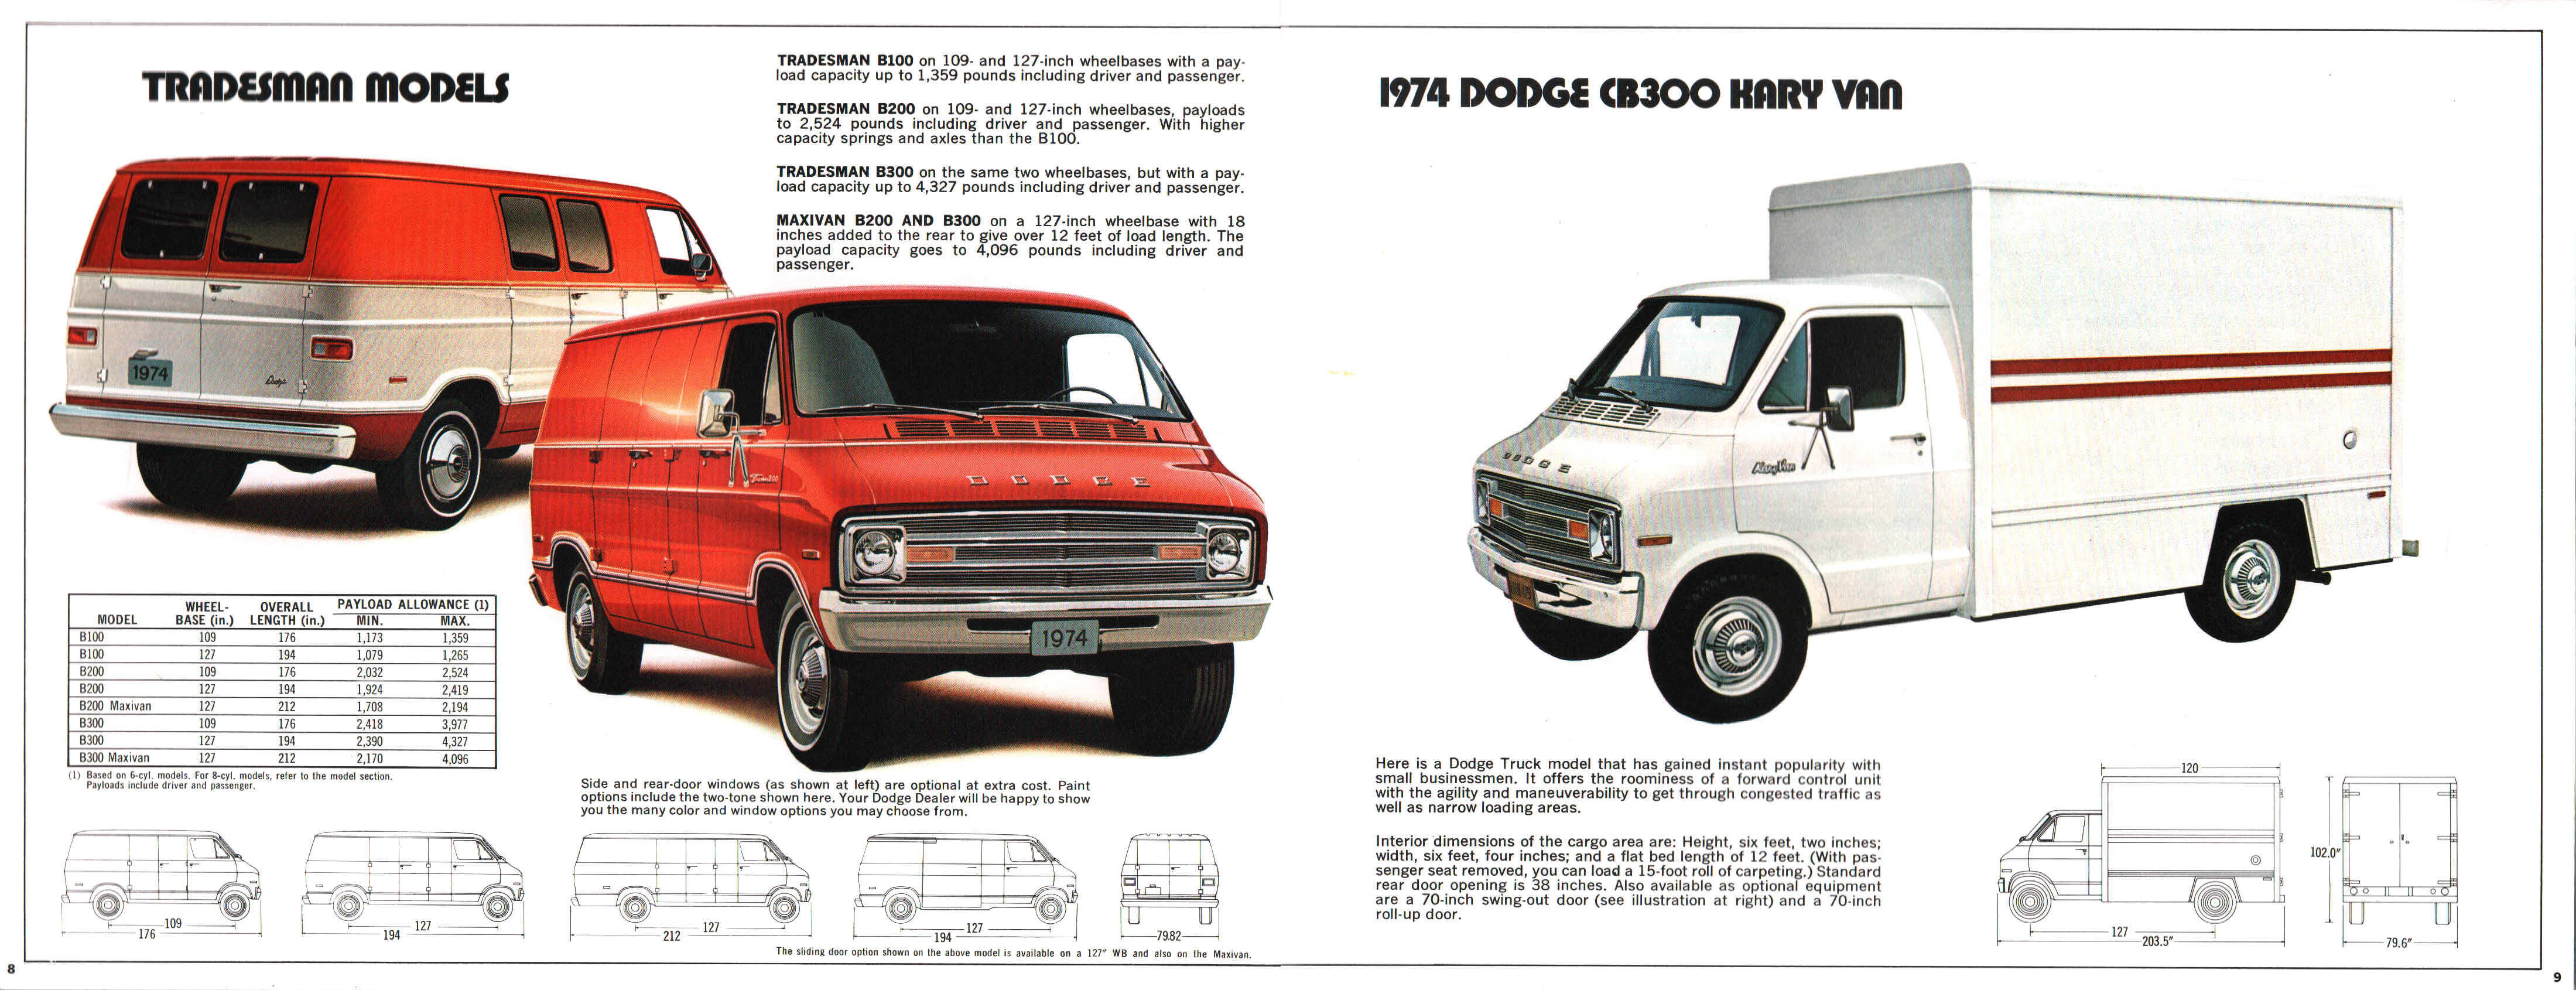 1974_Dodge_Tradesman_Vans-08-09